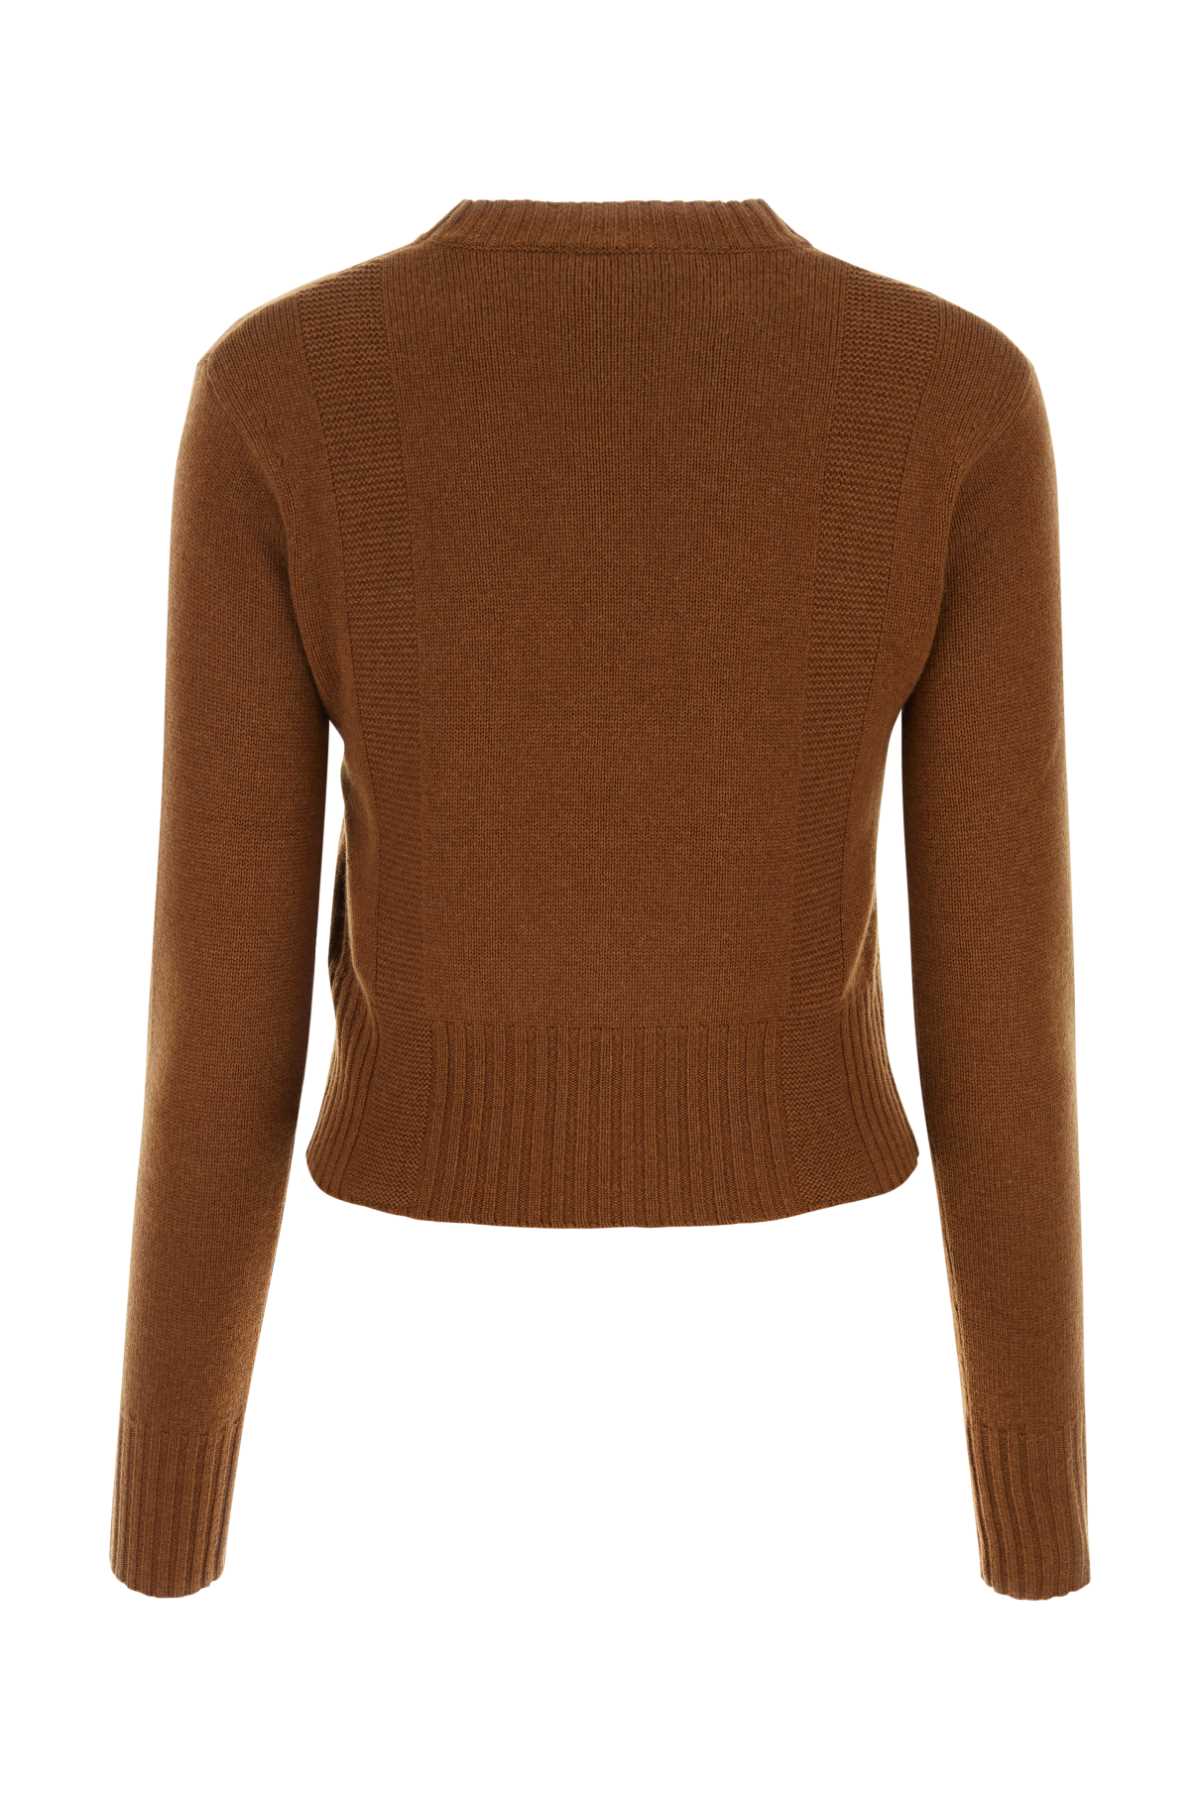 Max Mara Brown Wool Blend Sweater In 003